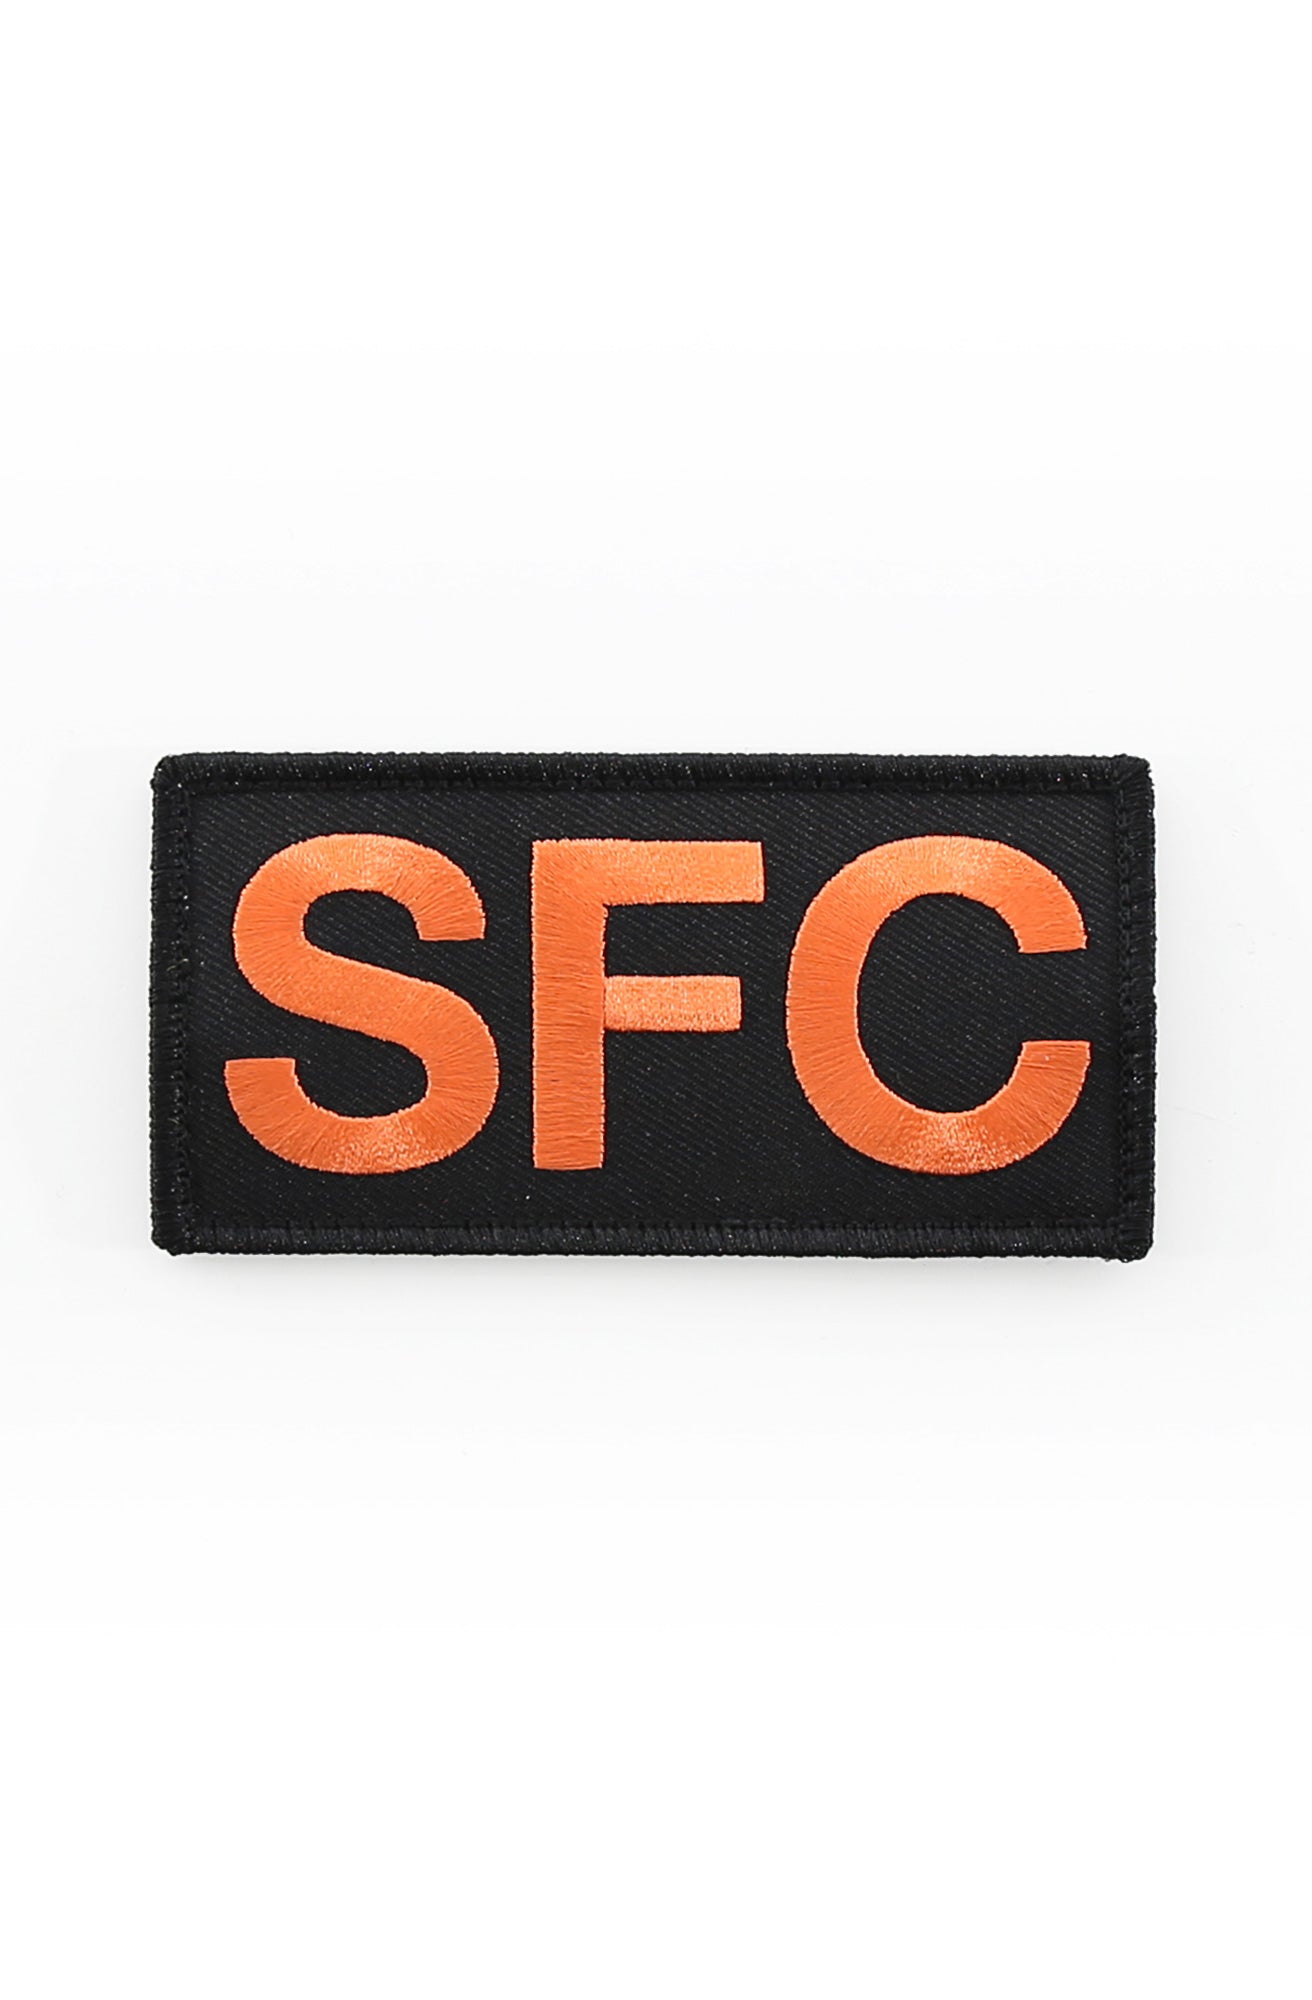 SFC (Velcro Patch 2" x 4")